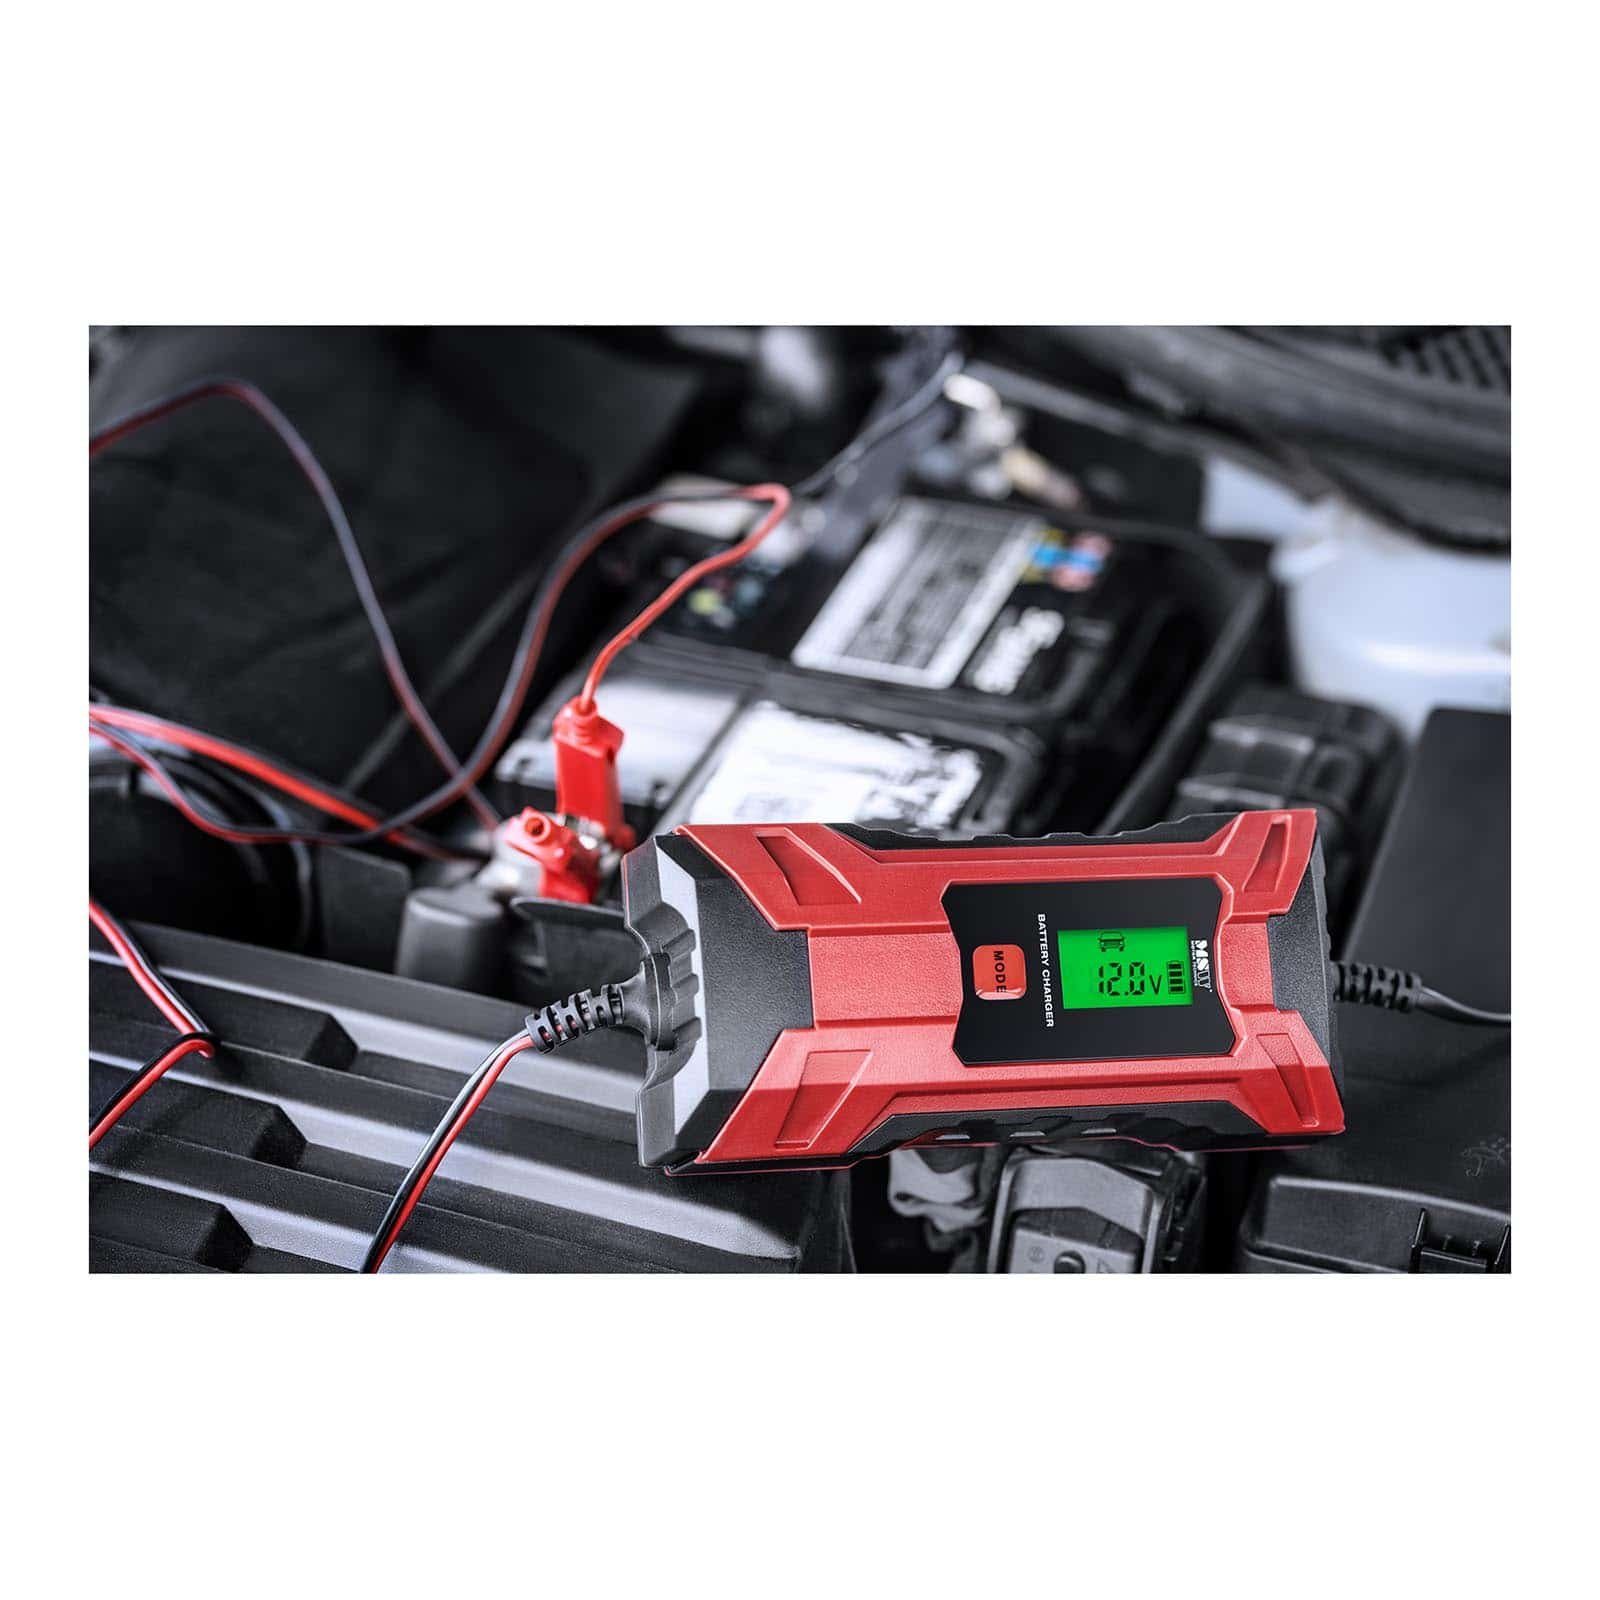 LCD Batterieladegerät Auto Kfz Schnellladen 12V/4A Autobatterie-Ladegerät 6V/2A Ladegerät Pkw MSW